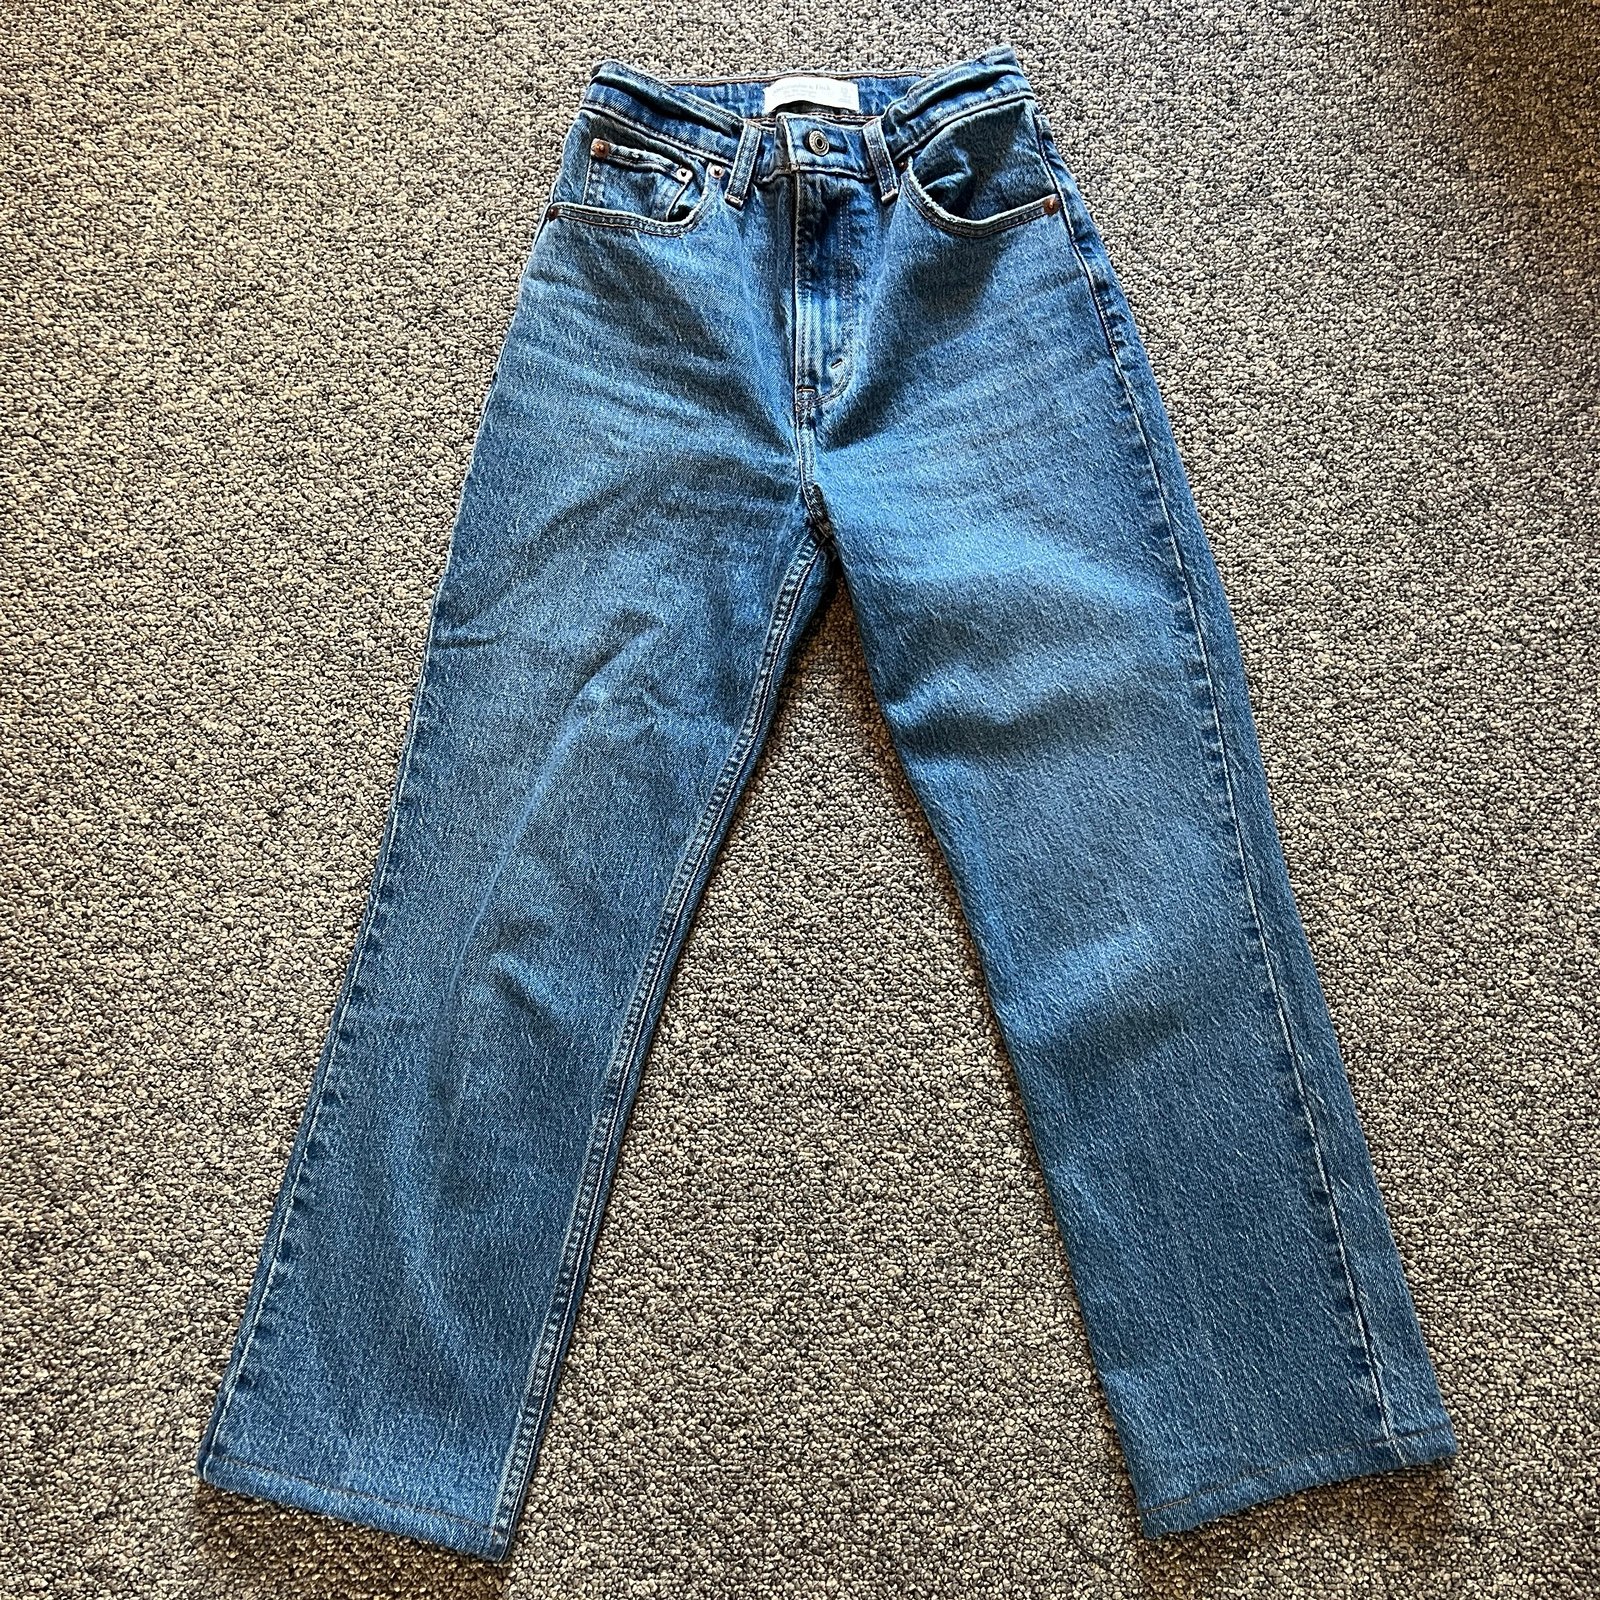 Affordable Abercrombie Jeans pD4HsRUzC online store